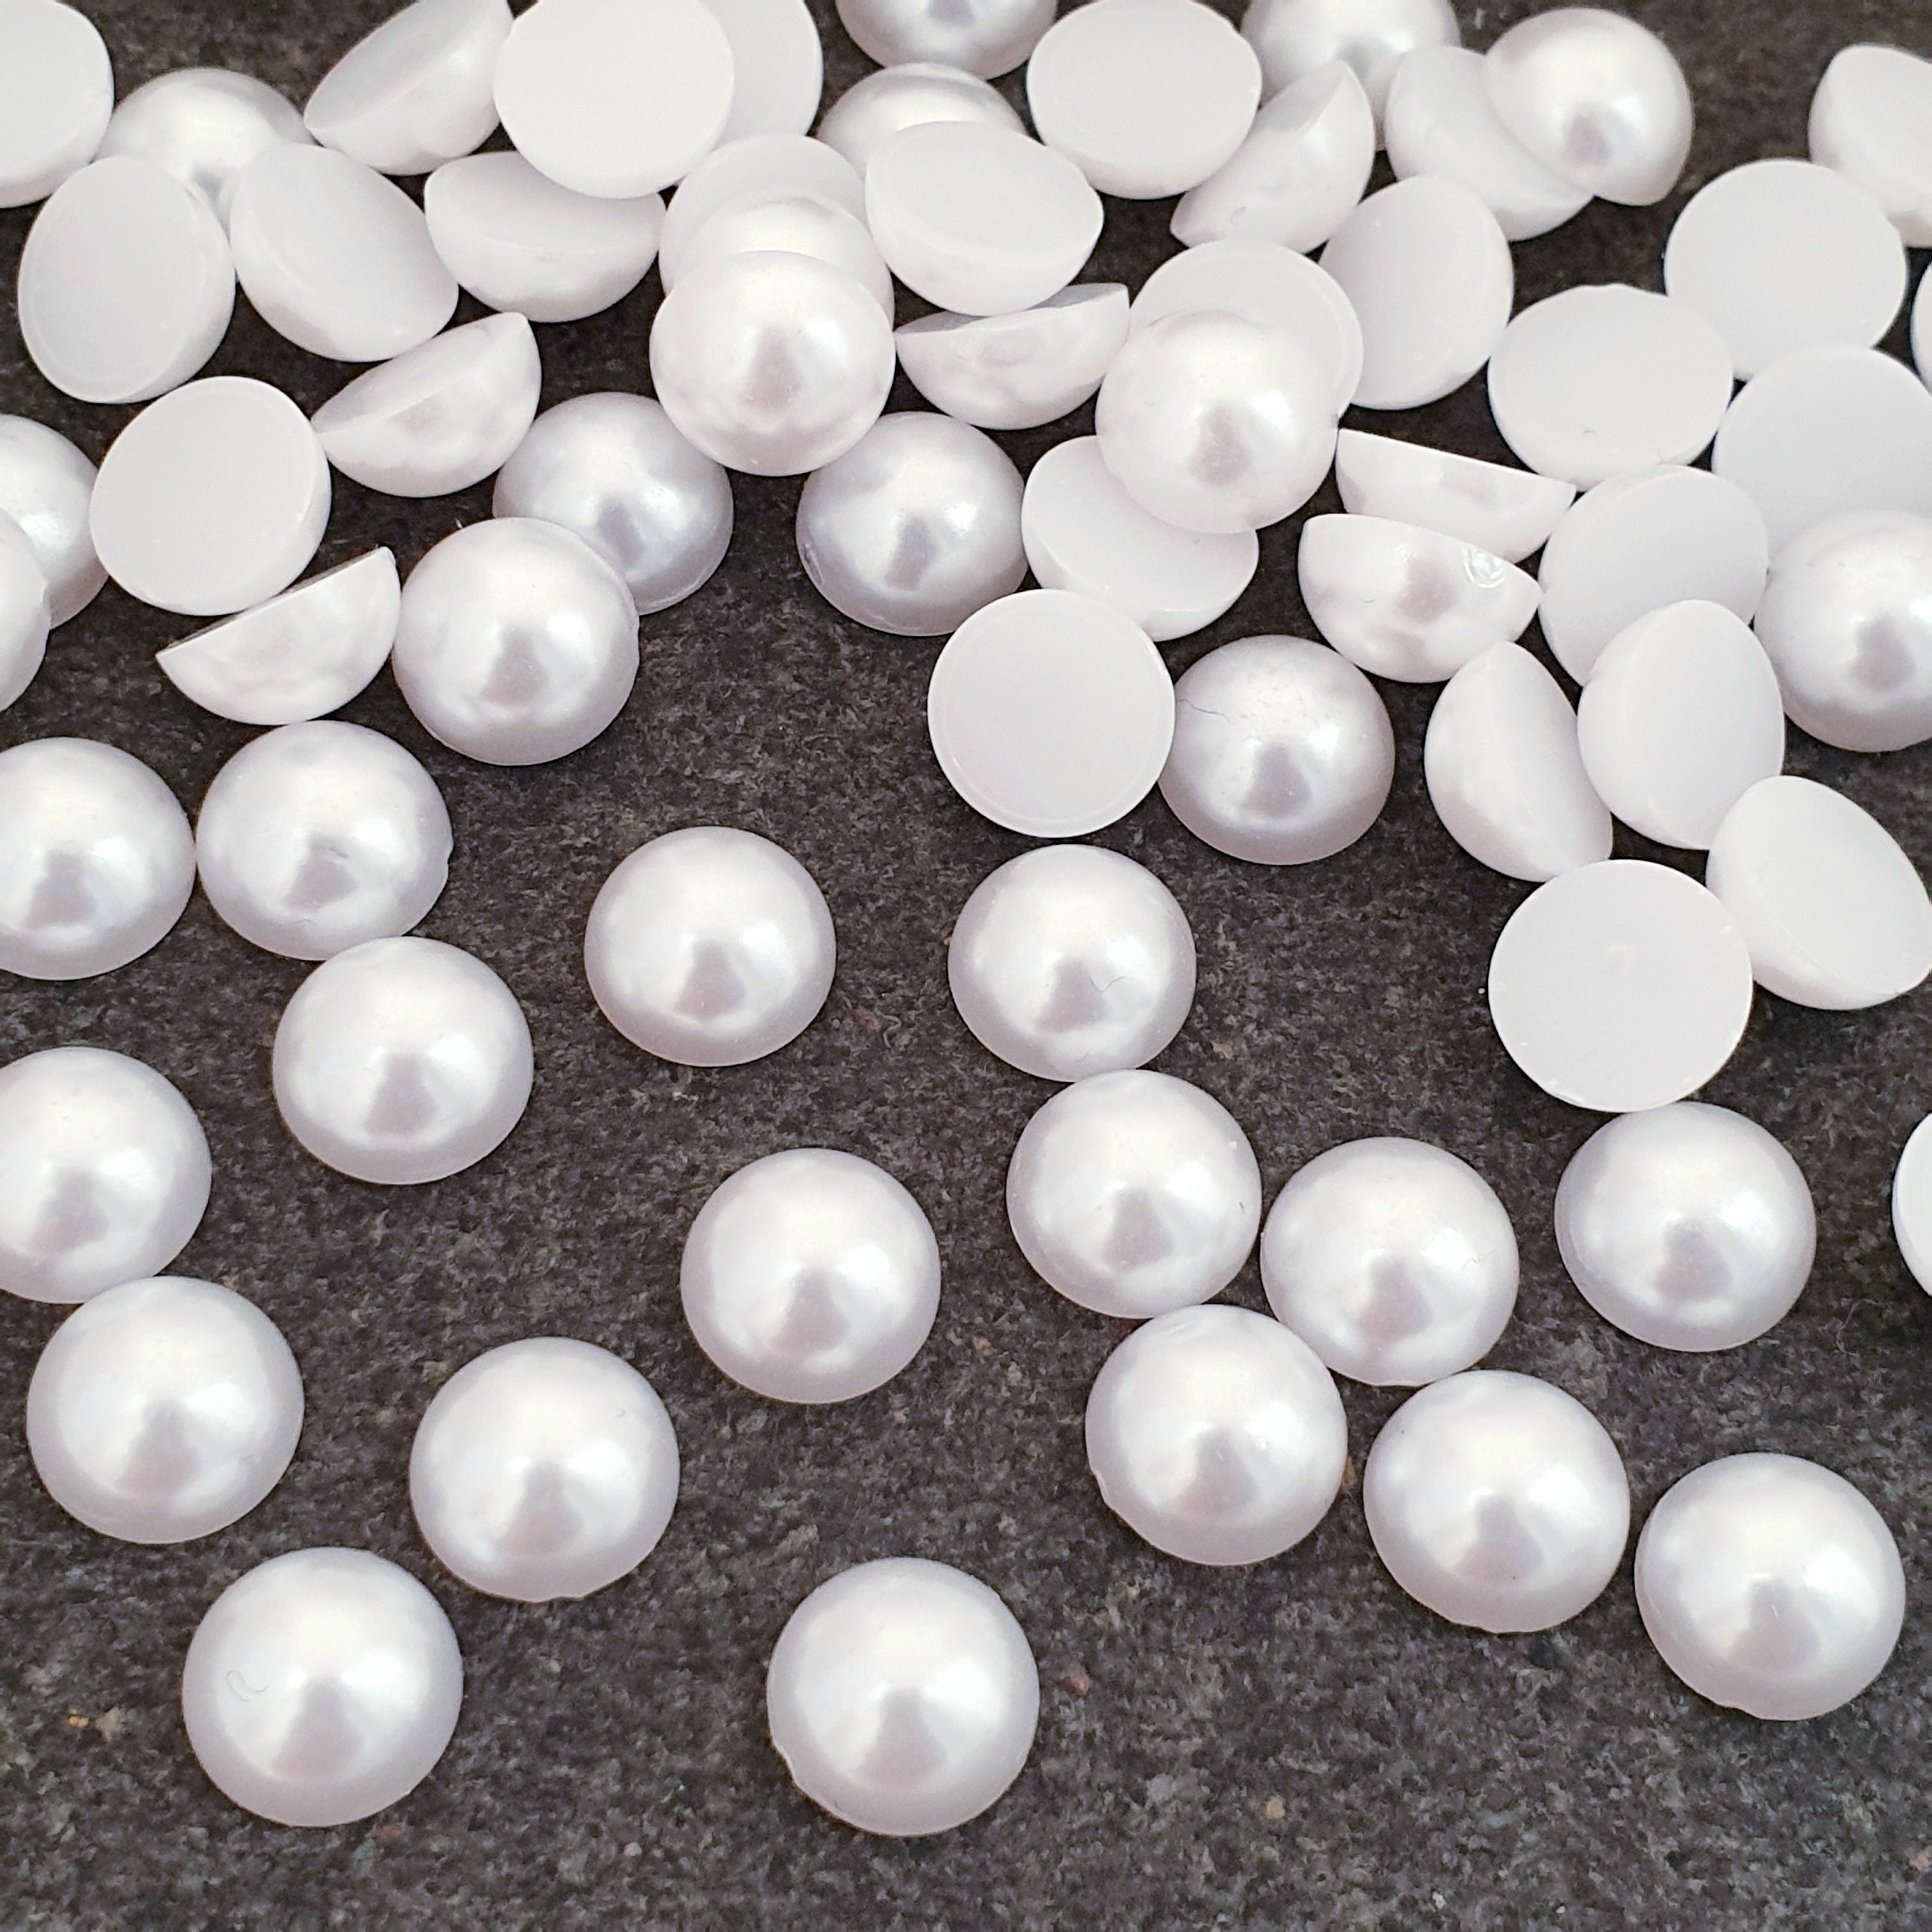 MajorCrafts White Flat Back Half Round Resin Pearls C15